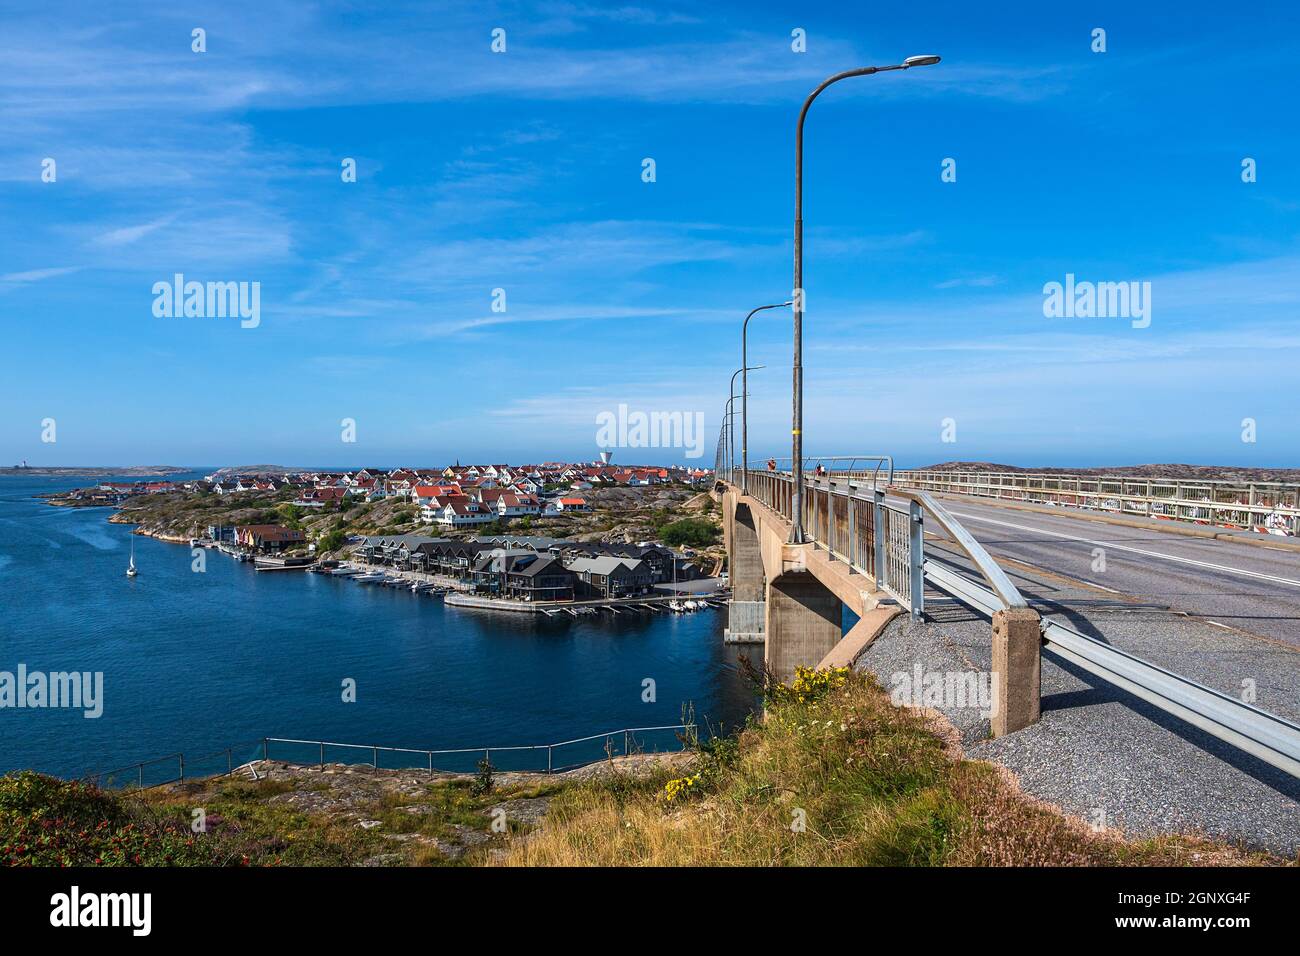 View to the city Smoegen in Sweden. Stock Photo